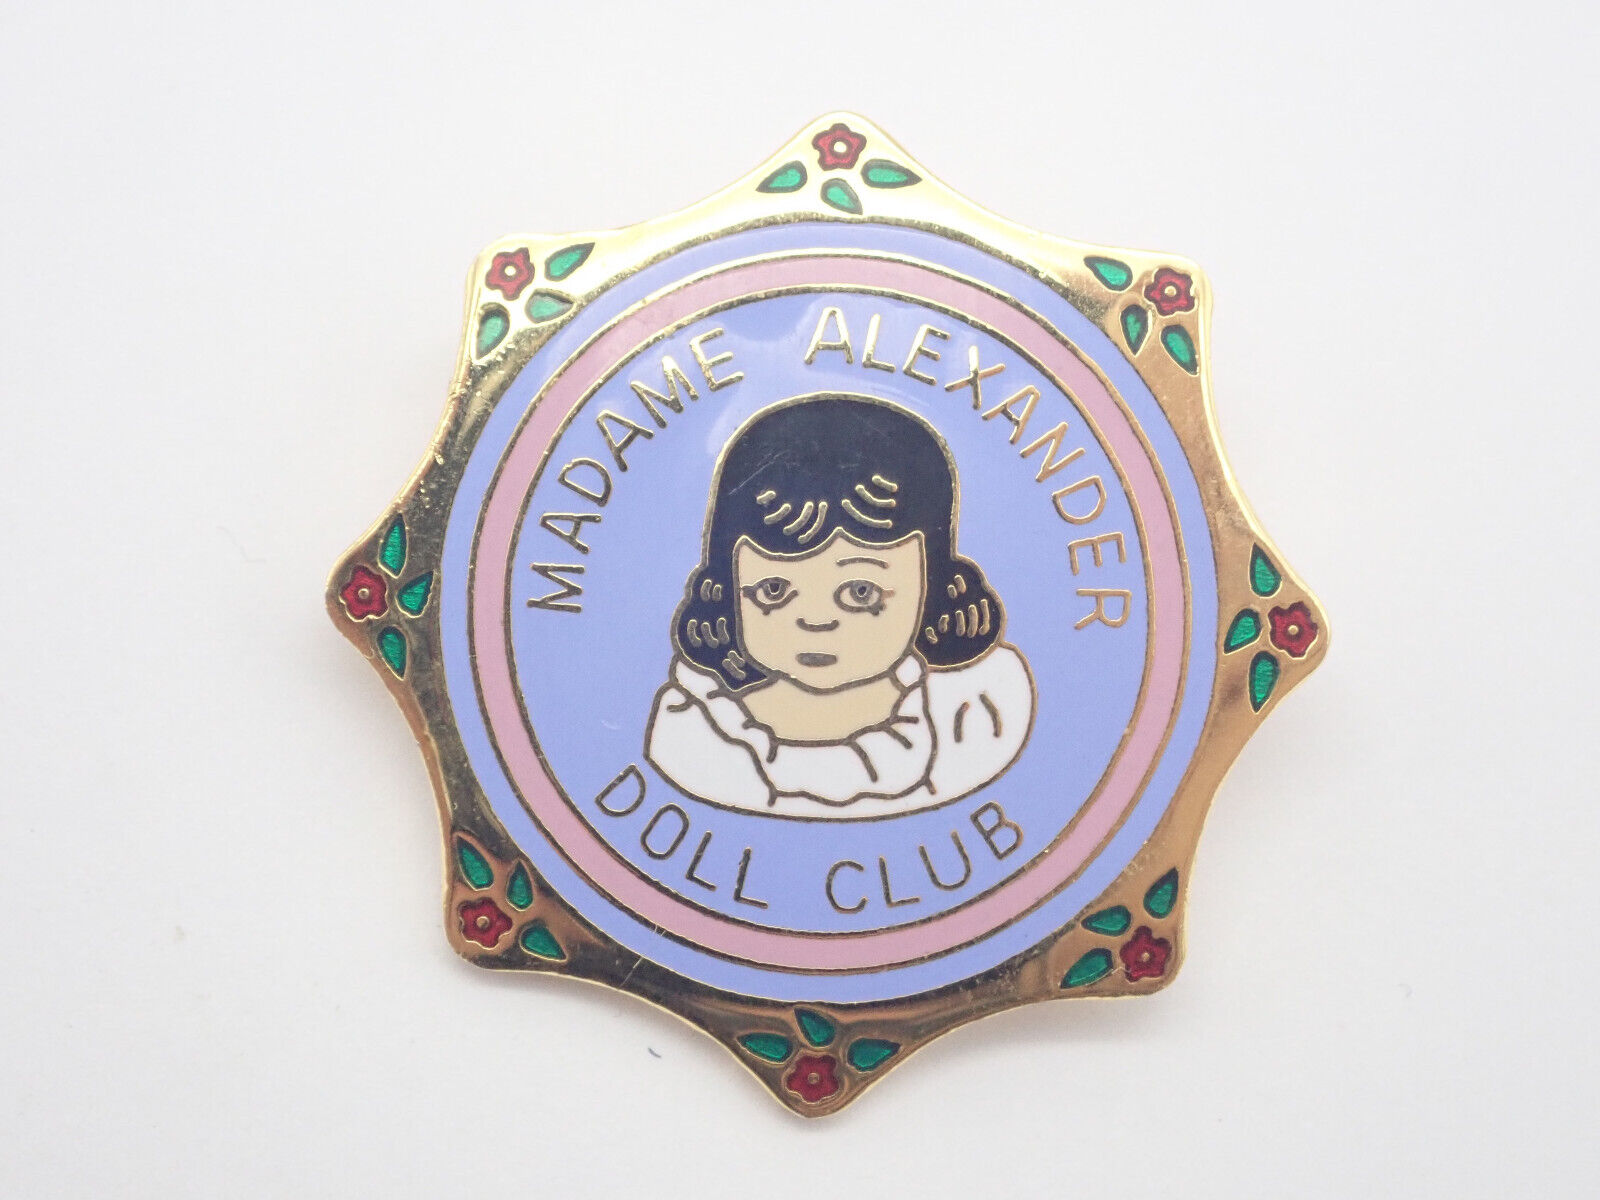 Madame Alexander Doll Club Vintage Lapel Pin